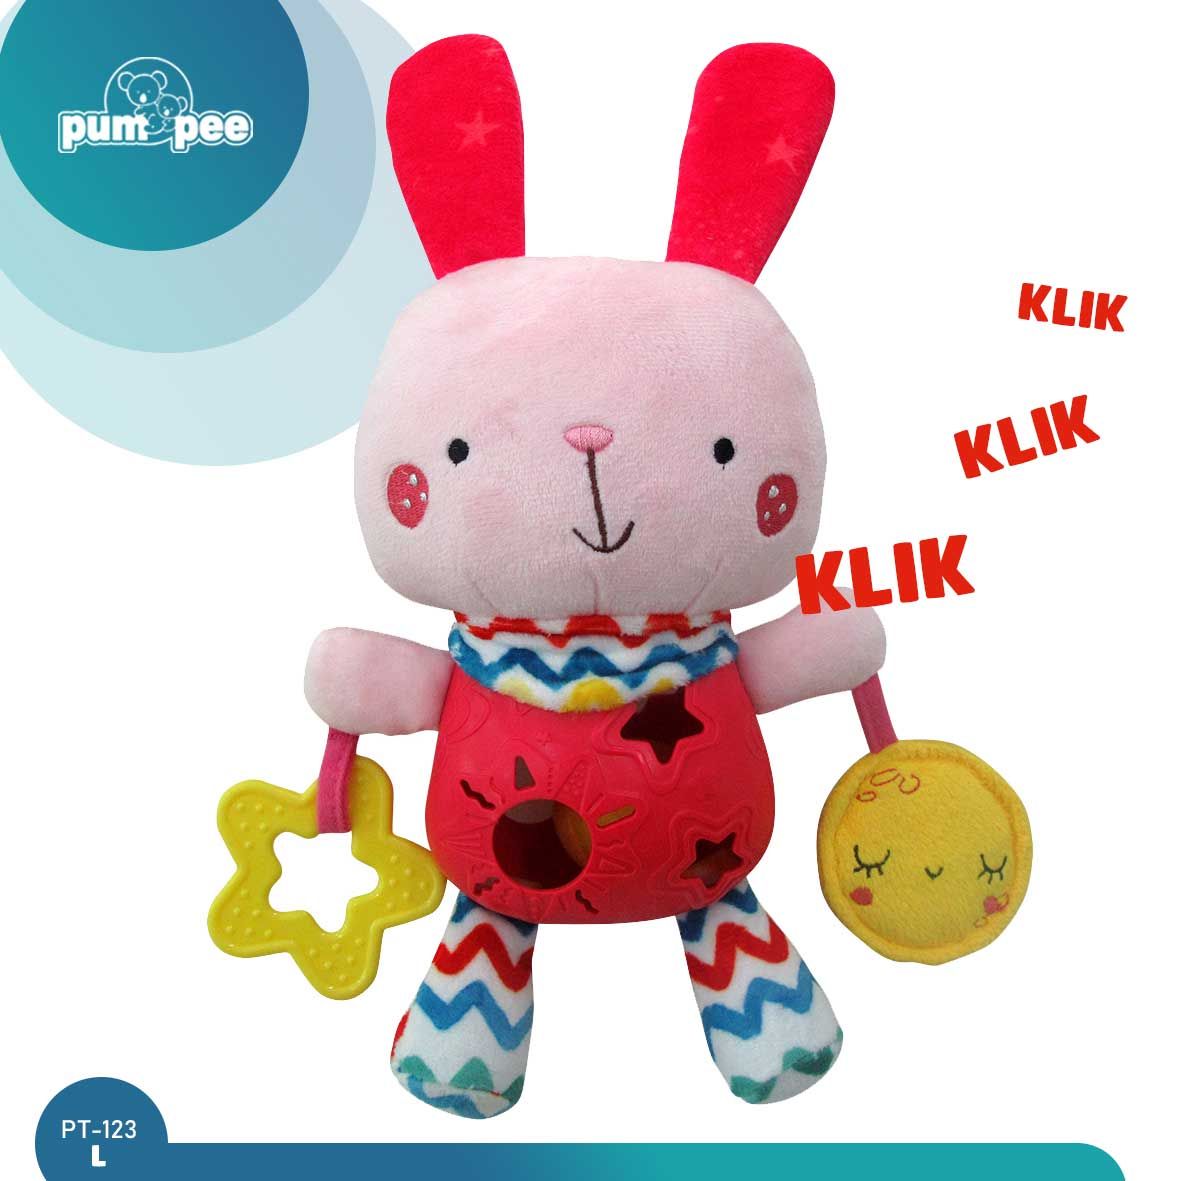 Pumpee Soft Plastic Toy - 'My Owl Wonderland' Pink Bunny | PT-123L - 1